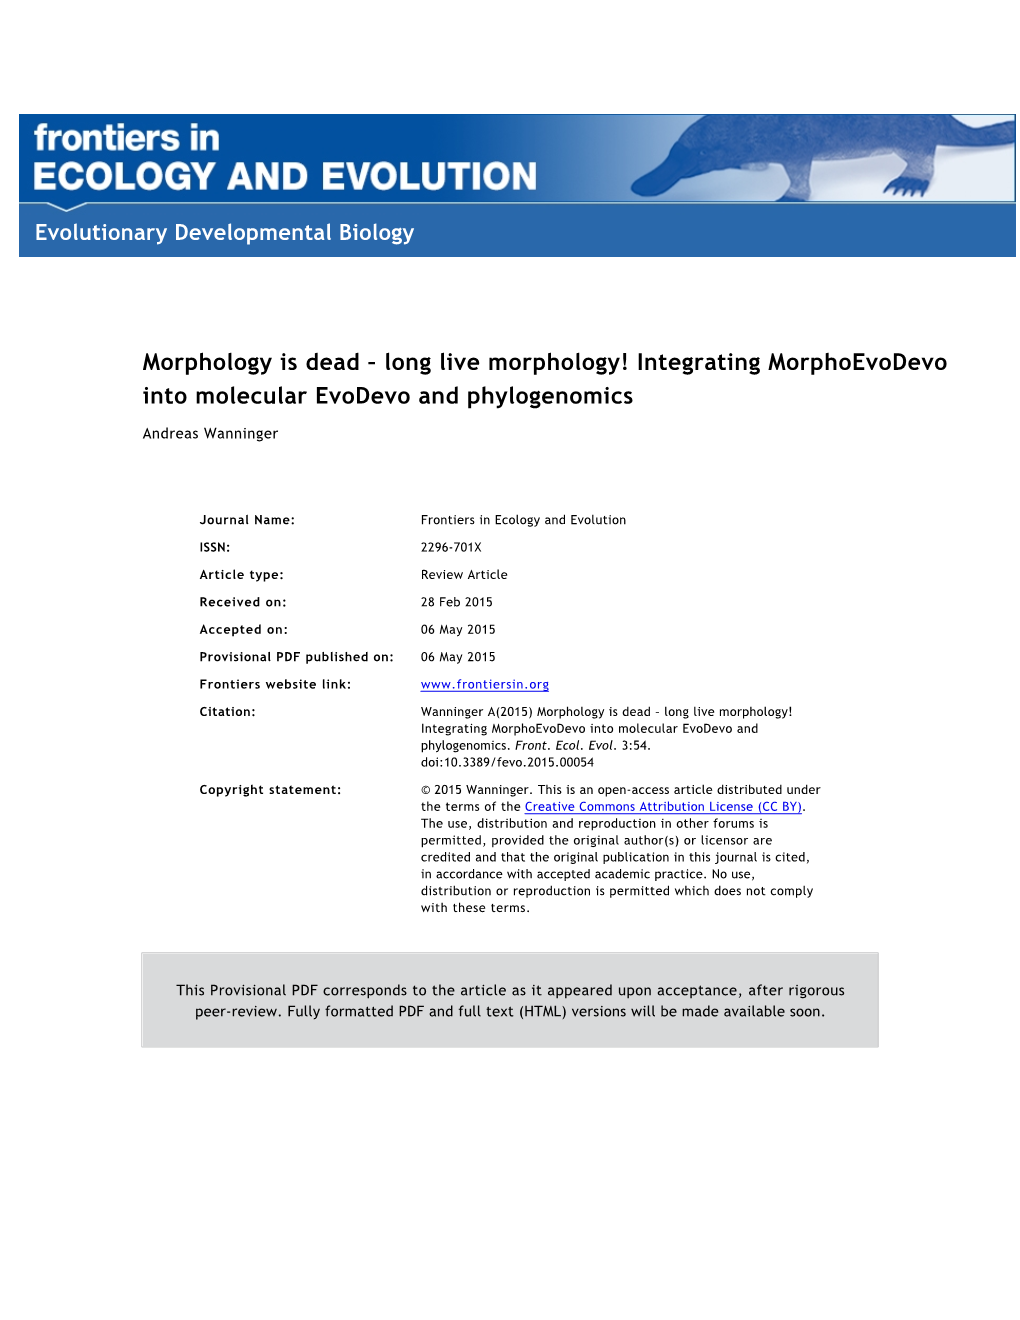 Long Live Morphology! Integrating Morphoevodevo Into Molecular Evodevo and Phylogenomics